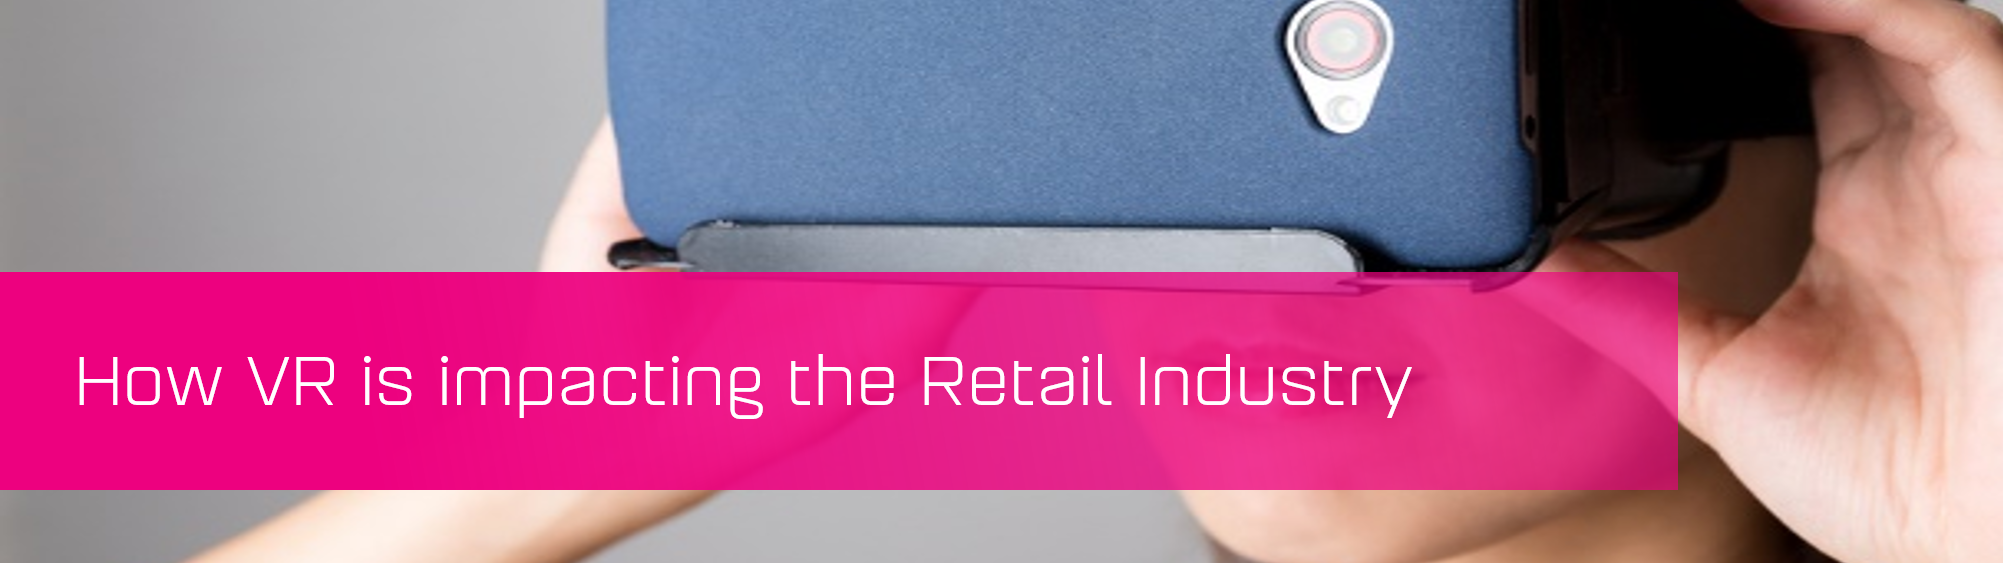 KCS SA - Blog - How VR impacts Retail 